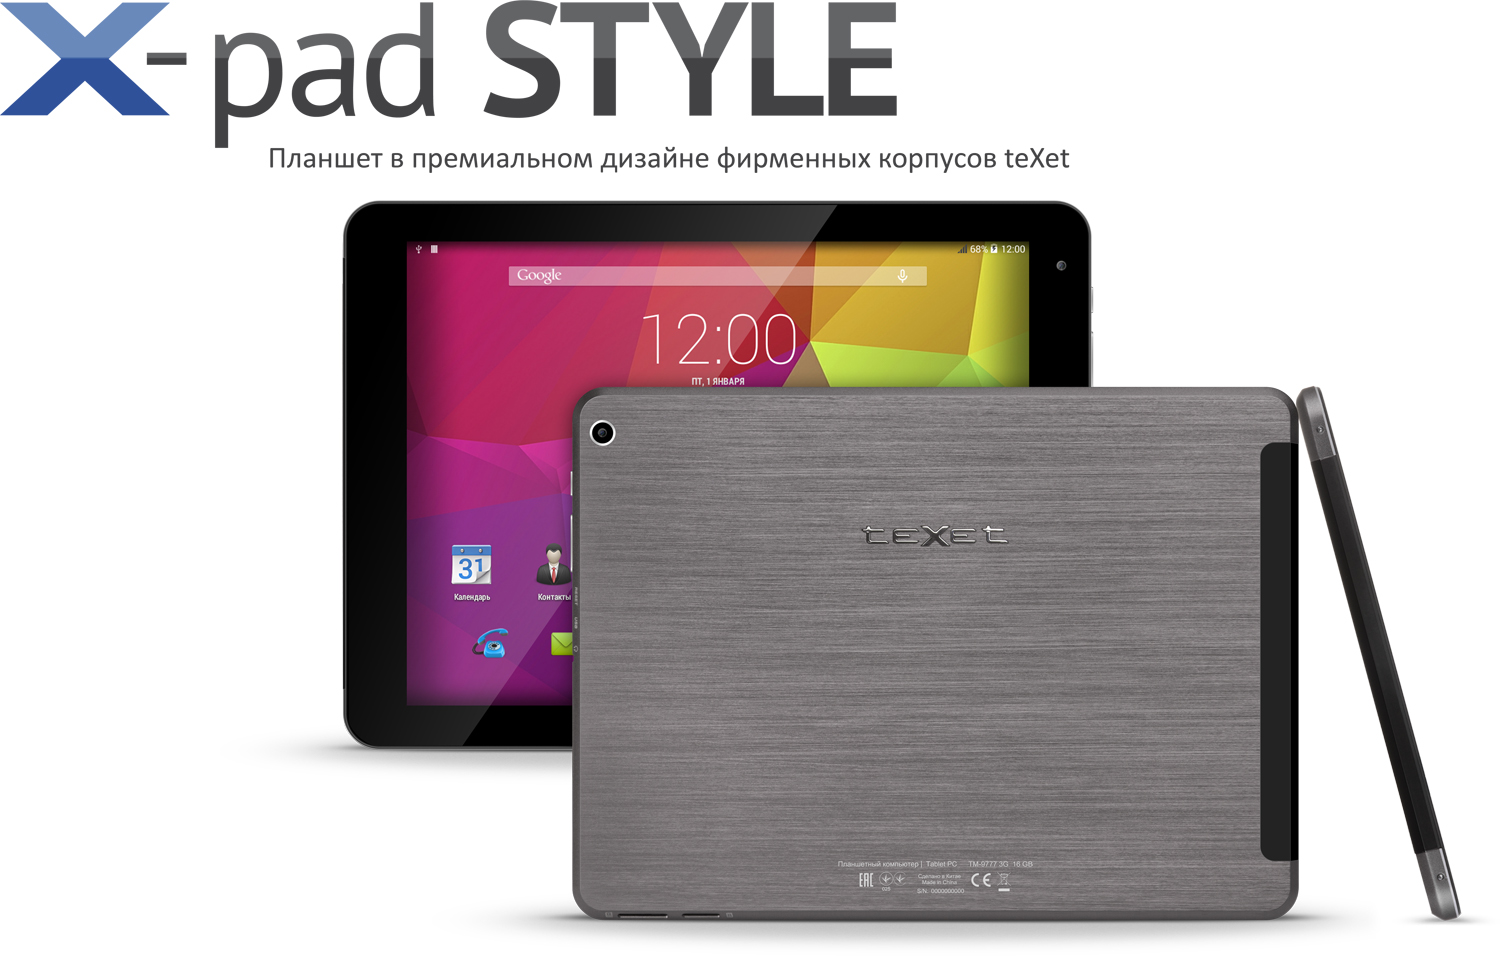 teXet представляет планшет X-pad STYLE 10.1 3G